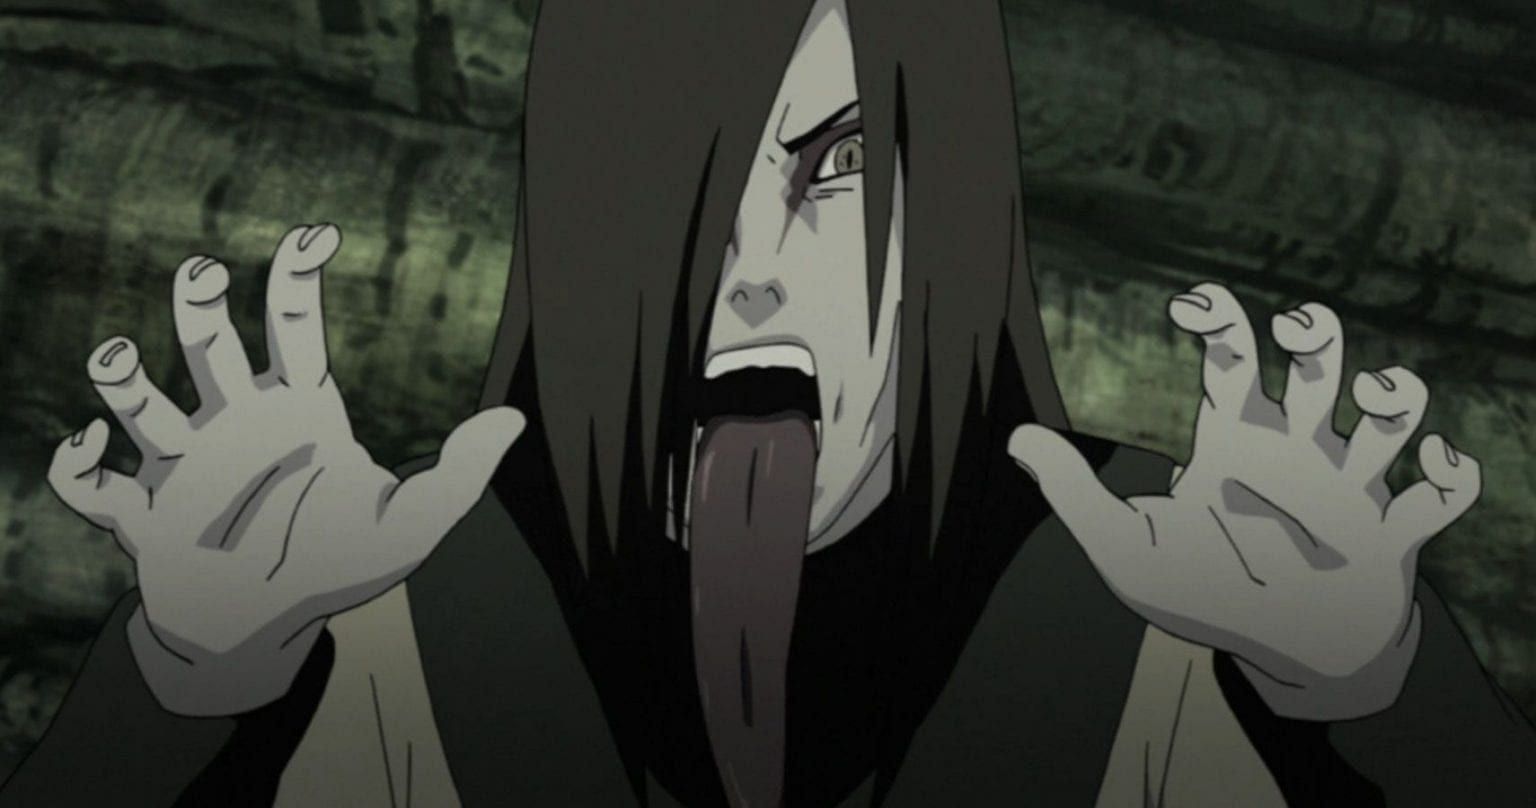 Orochimaru, as seen in the anime Naruto (Image via Studio Pierrot)